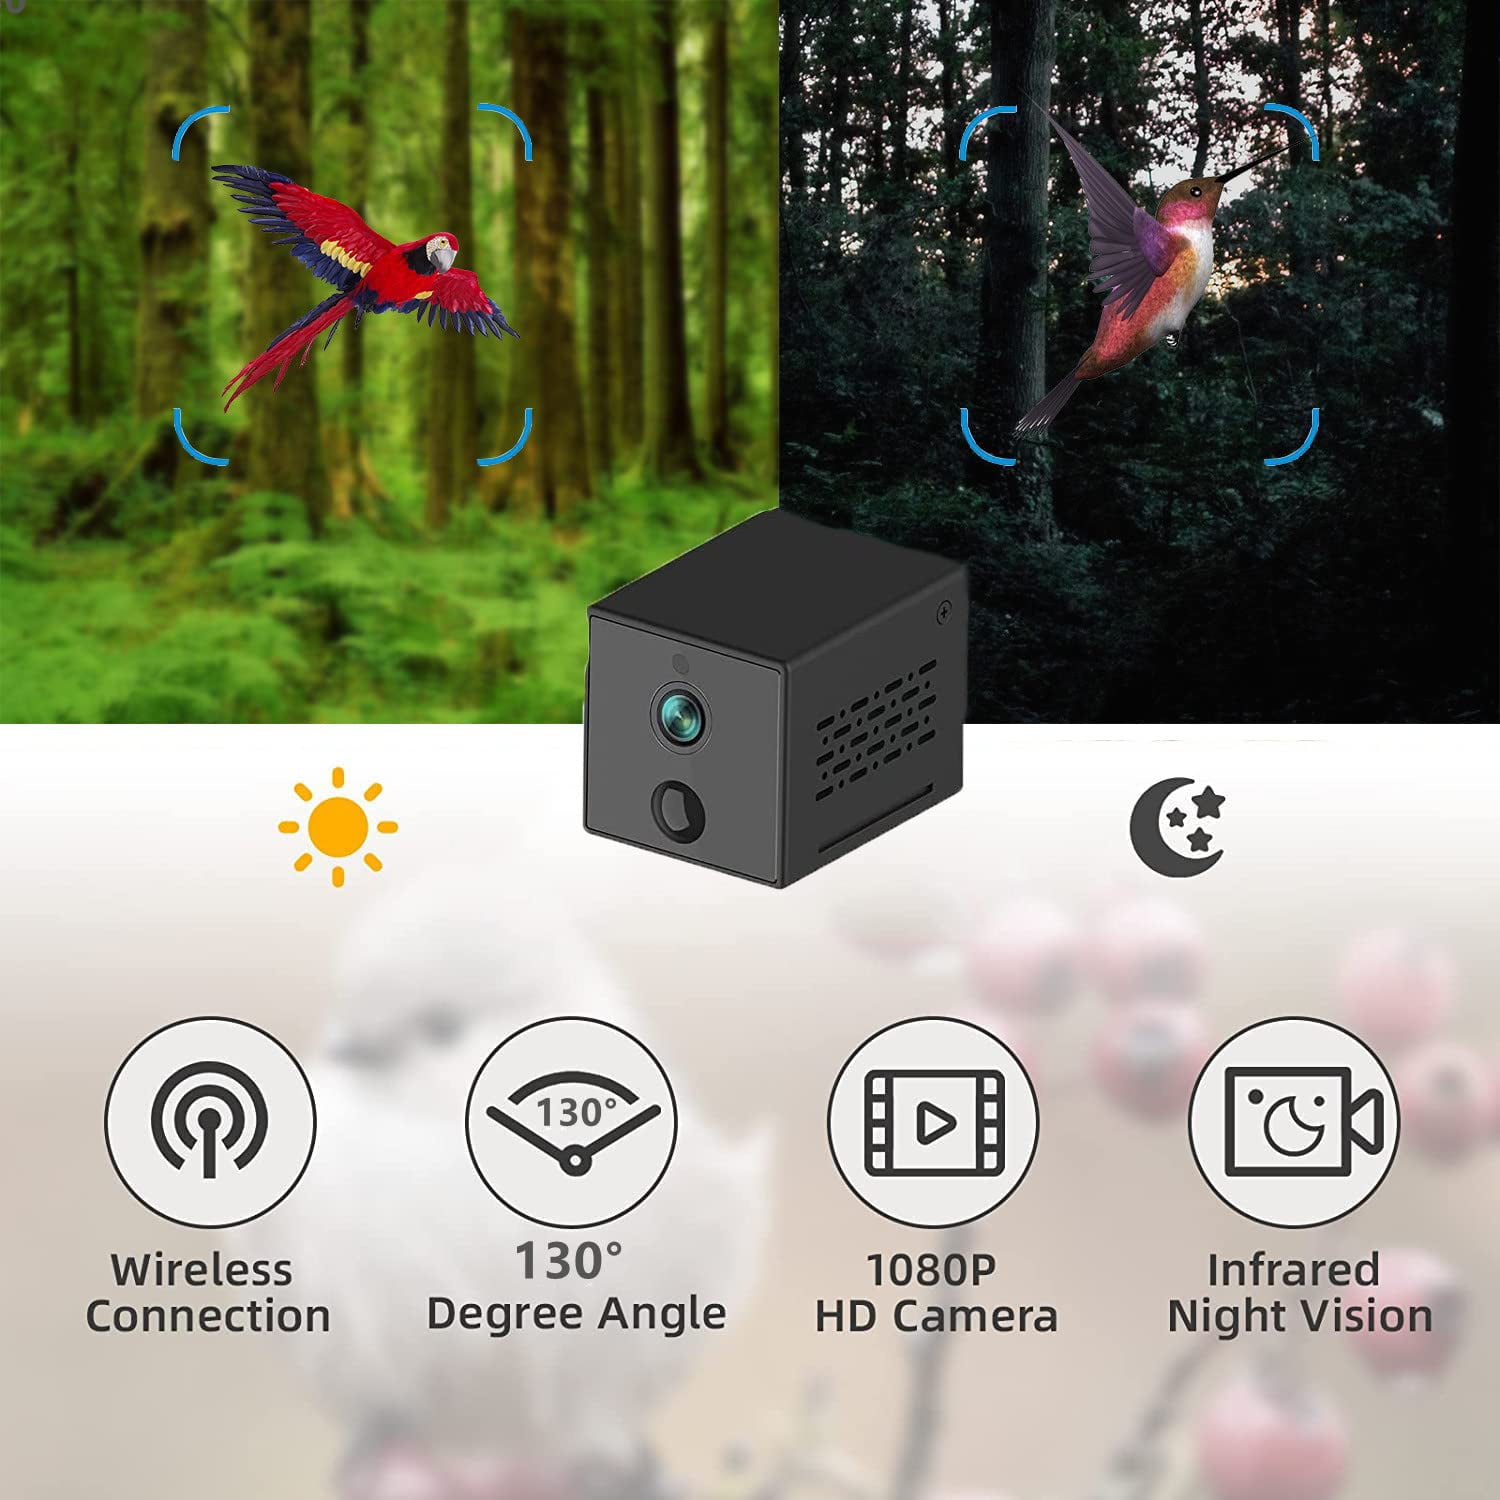 Adrinfly Smart Bird Feeder Camera Bird Feeders Wireless App Control AI Identify Bird Species Auto Capture Bird Videos